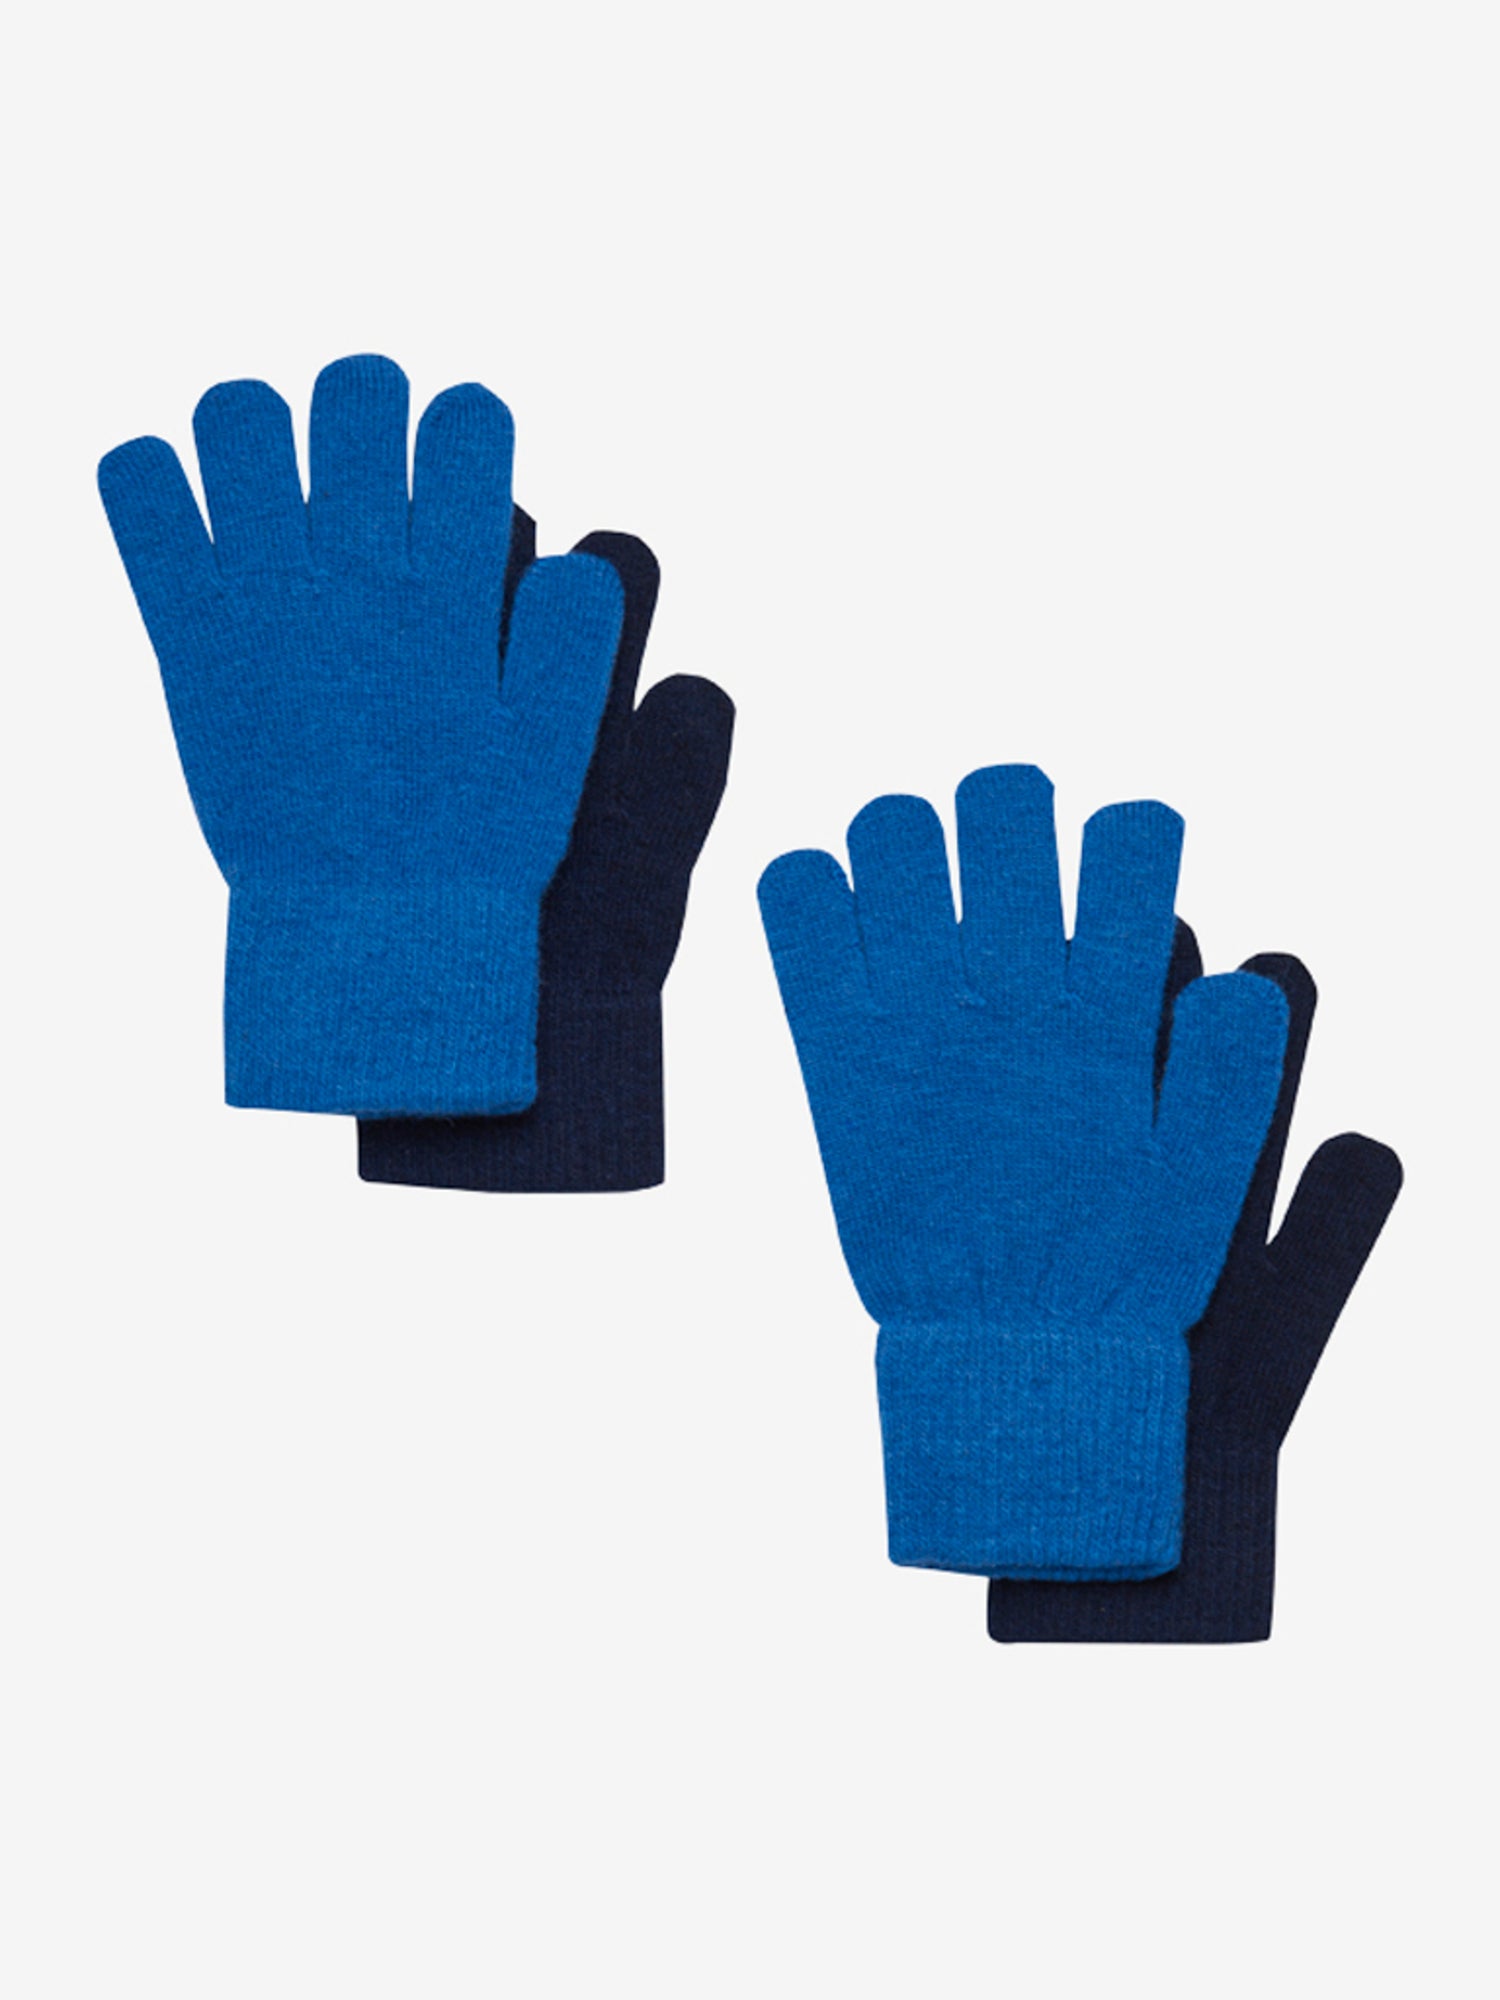 CeLaVi - Handschuhe 2-er Pack hellblau/ dunkelblau - AURYN Shop